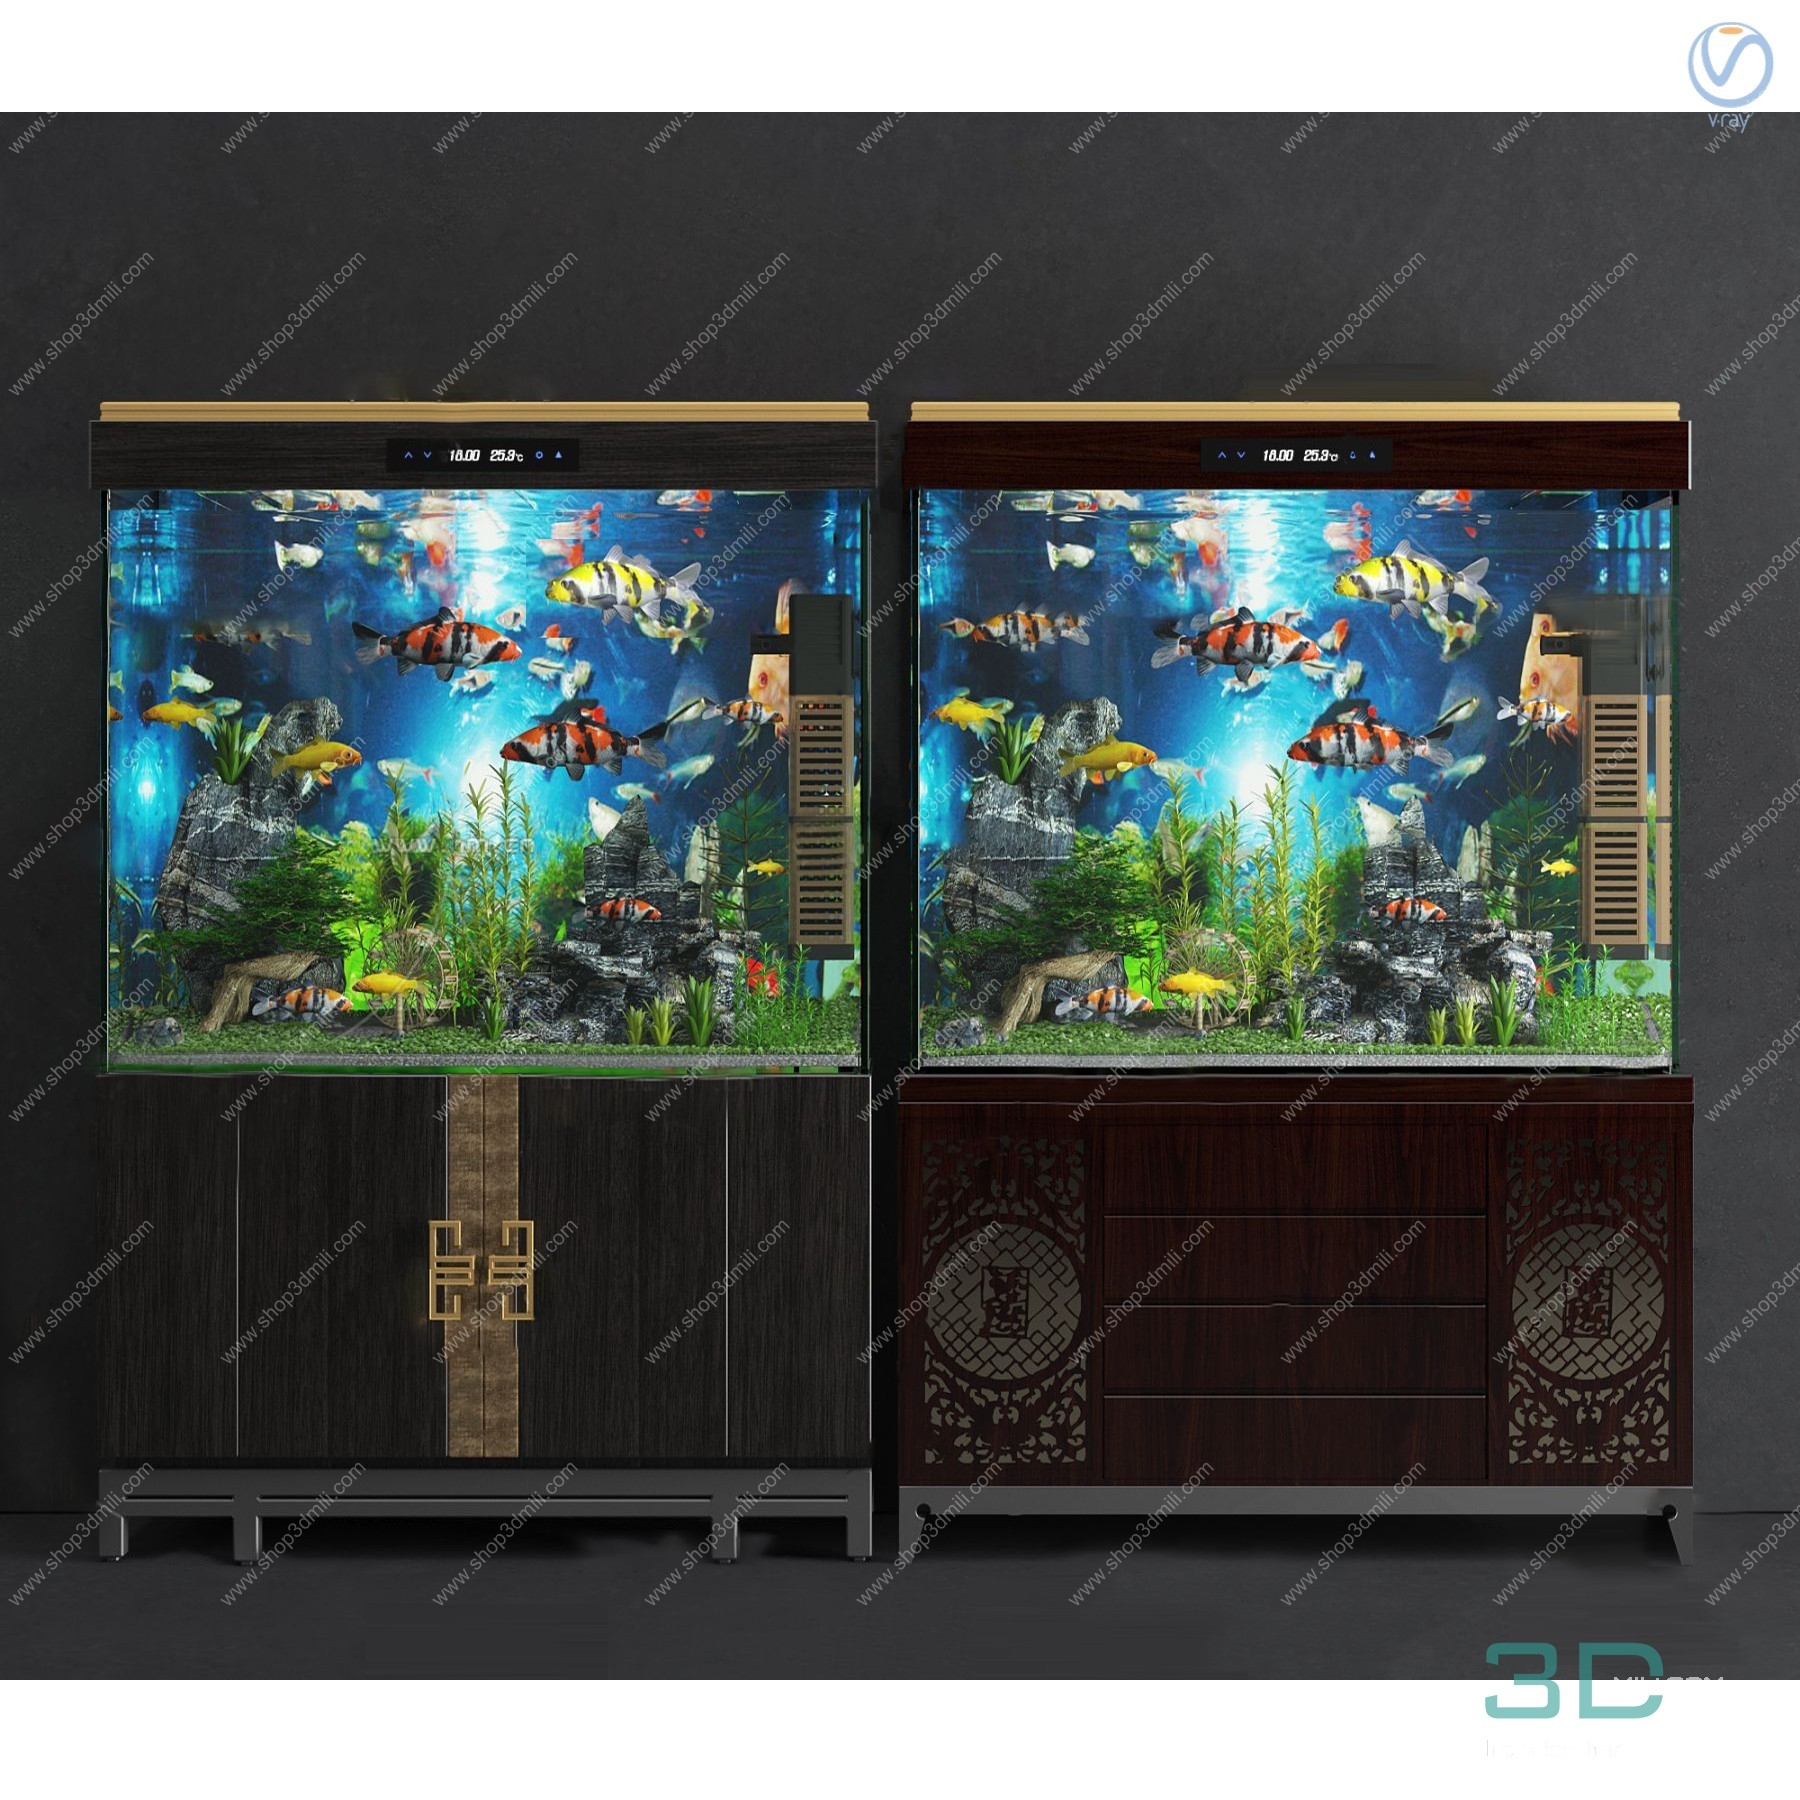 596. Sell Album Aquarium Fish Tank PRO Vol 1 3ds Max